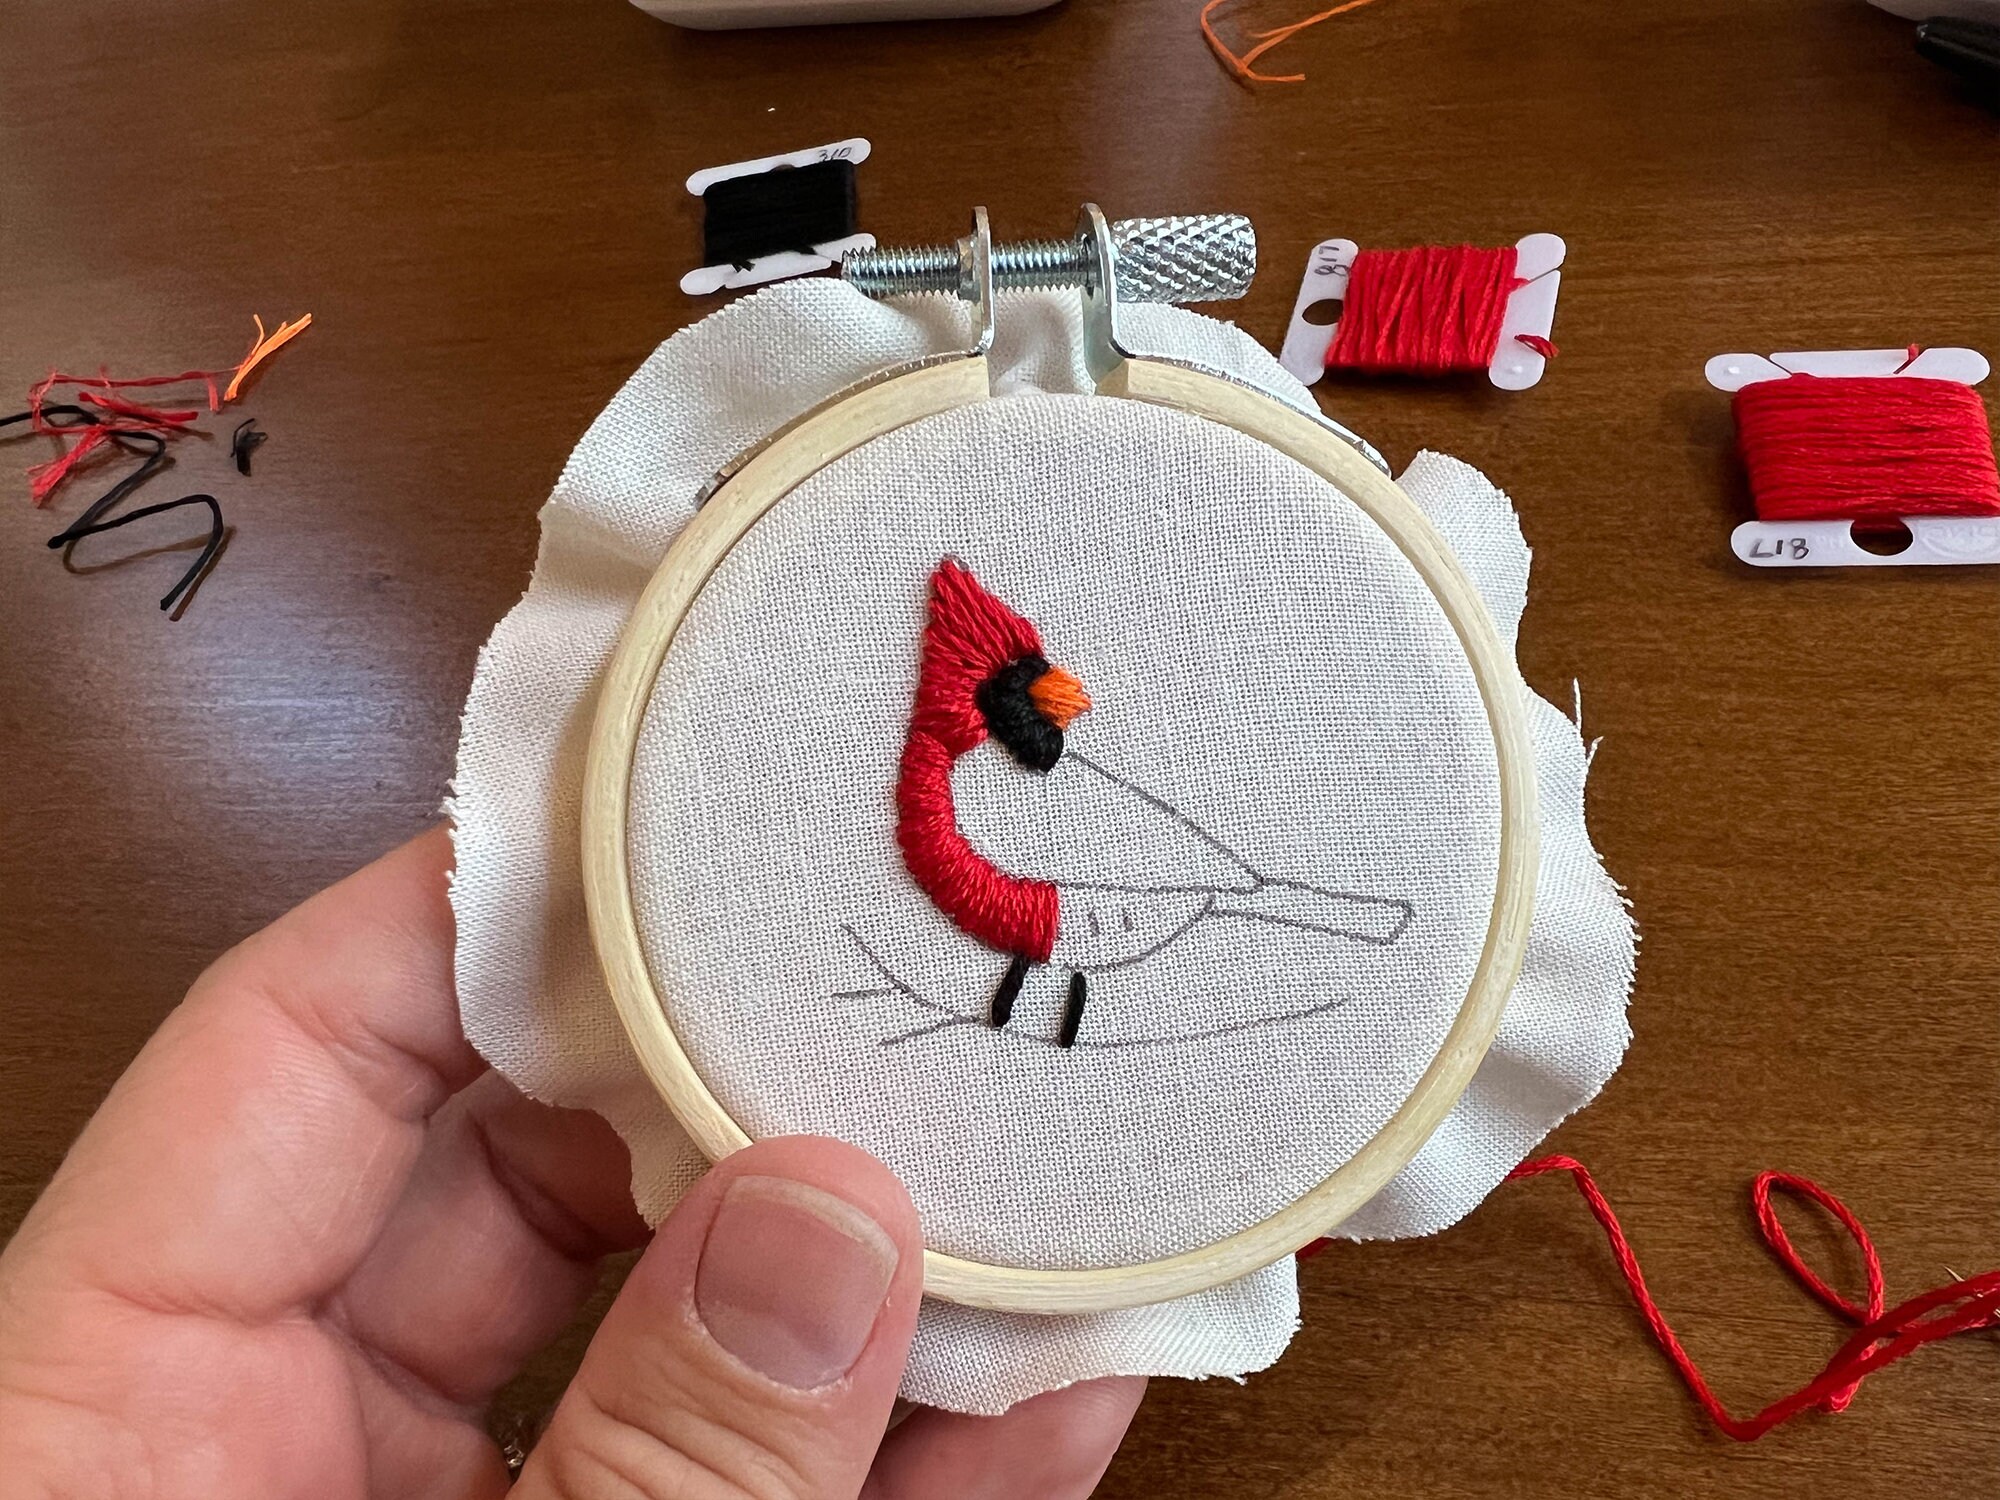 Embroidery Kit - Winter Birds - Handmade in the USA - , LLC